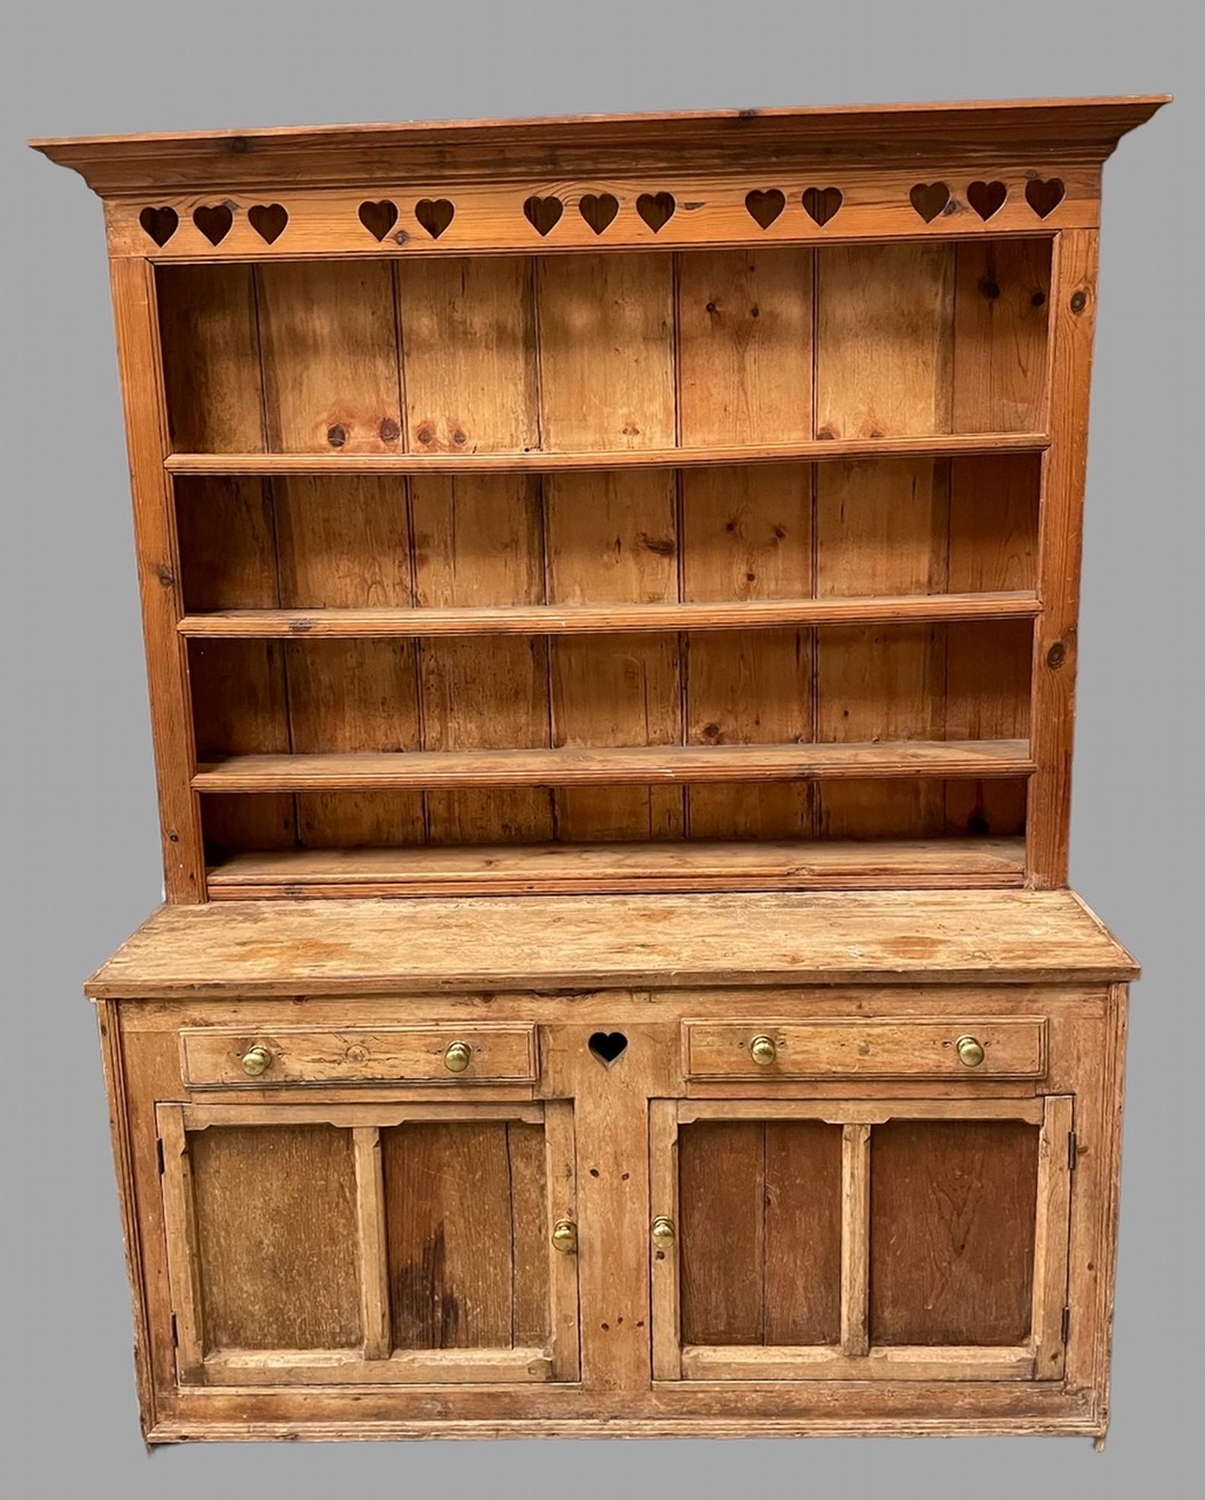 A Rustic Untouched Pine Dresser for Restoration